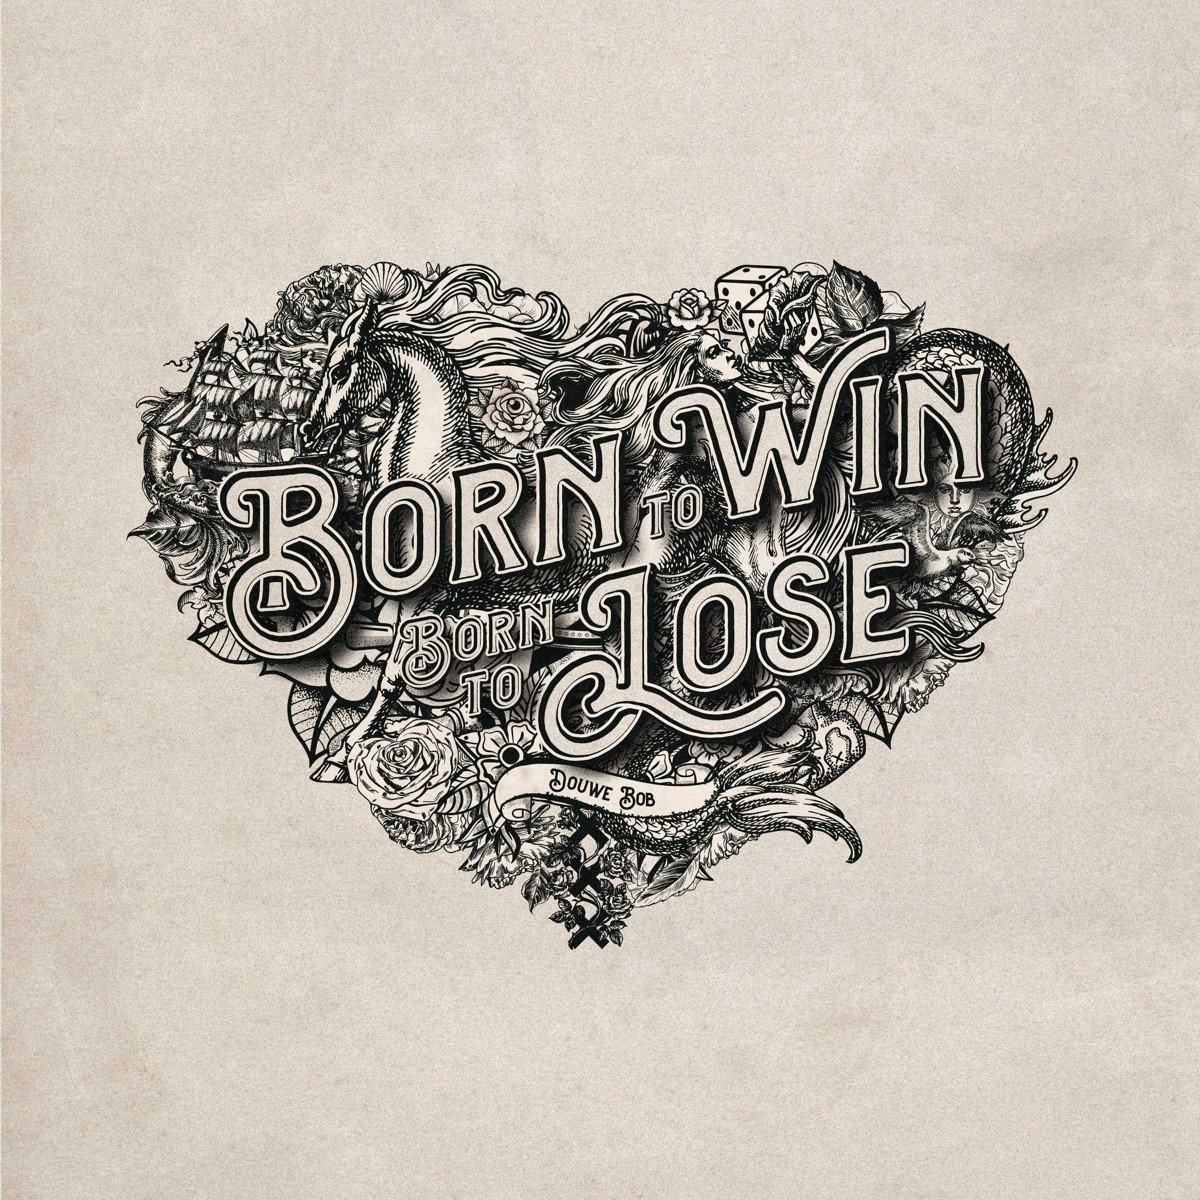 Douwe Bob - Born To Win, Born To Lose (CD) - Douwe Bob